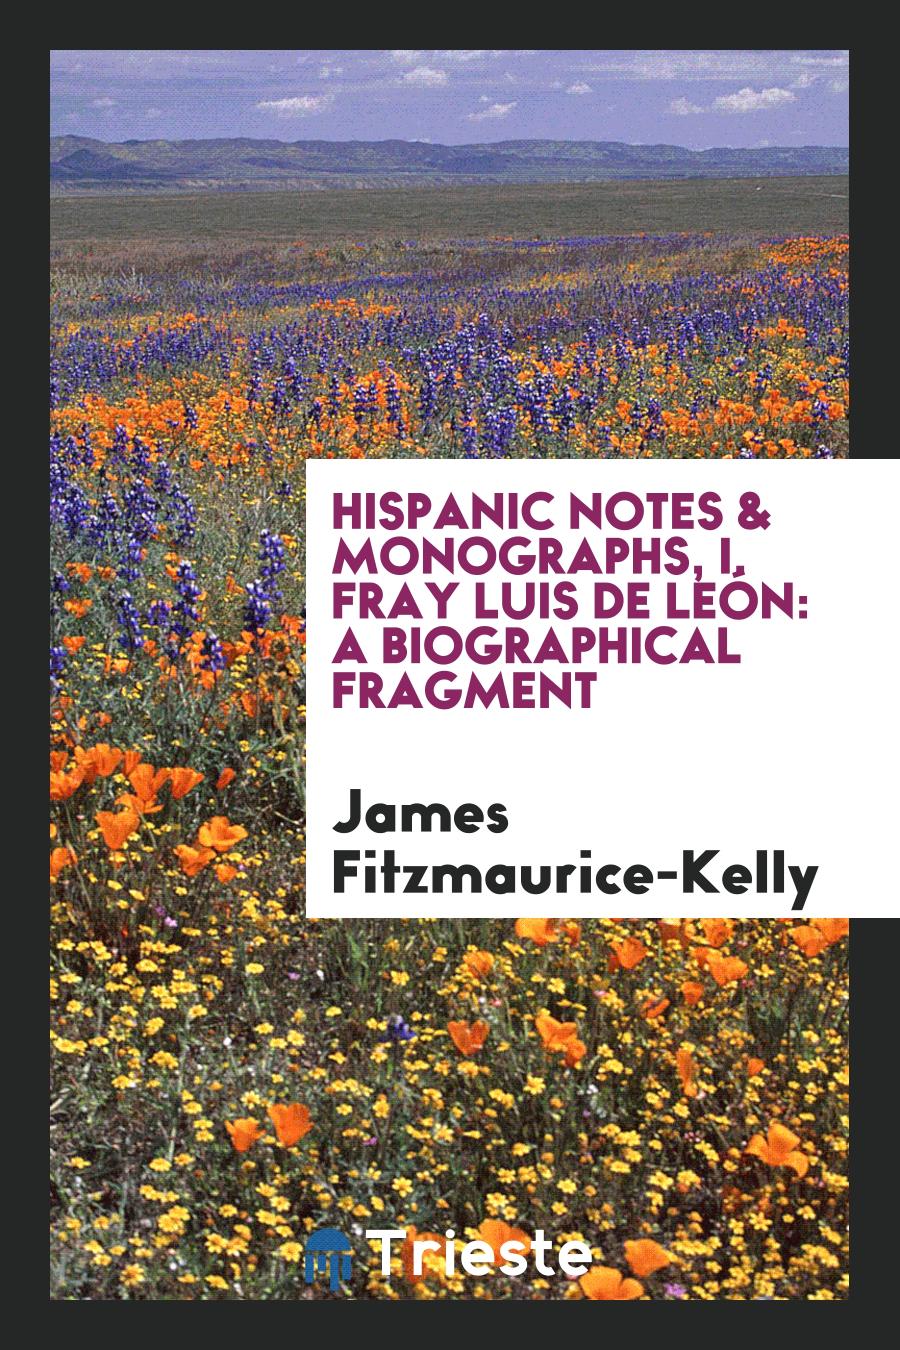 Hispanic notes & monographs, I. Fray Luis de León: a biographical fragment